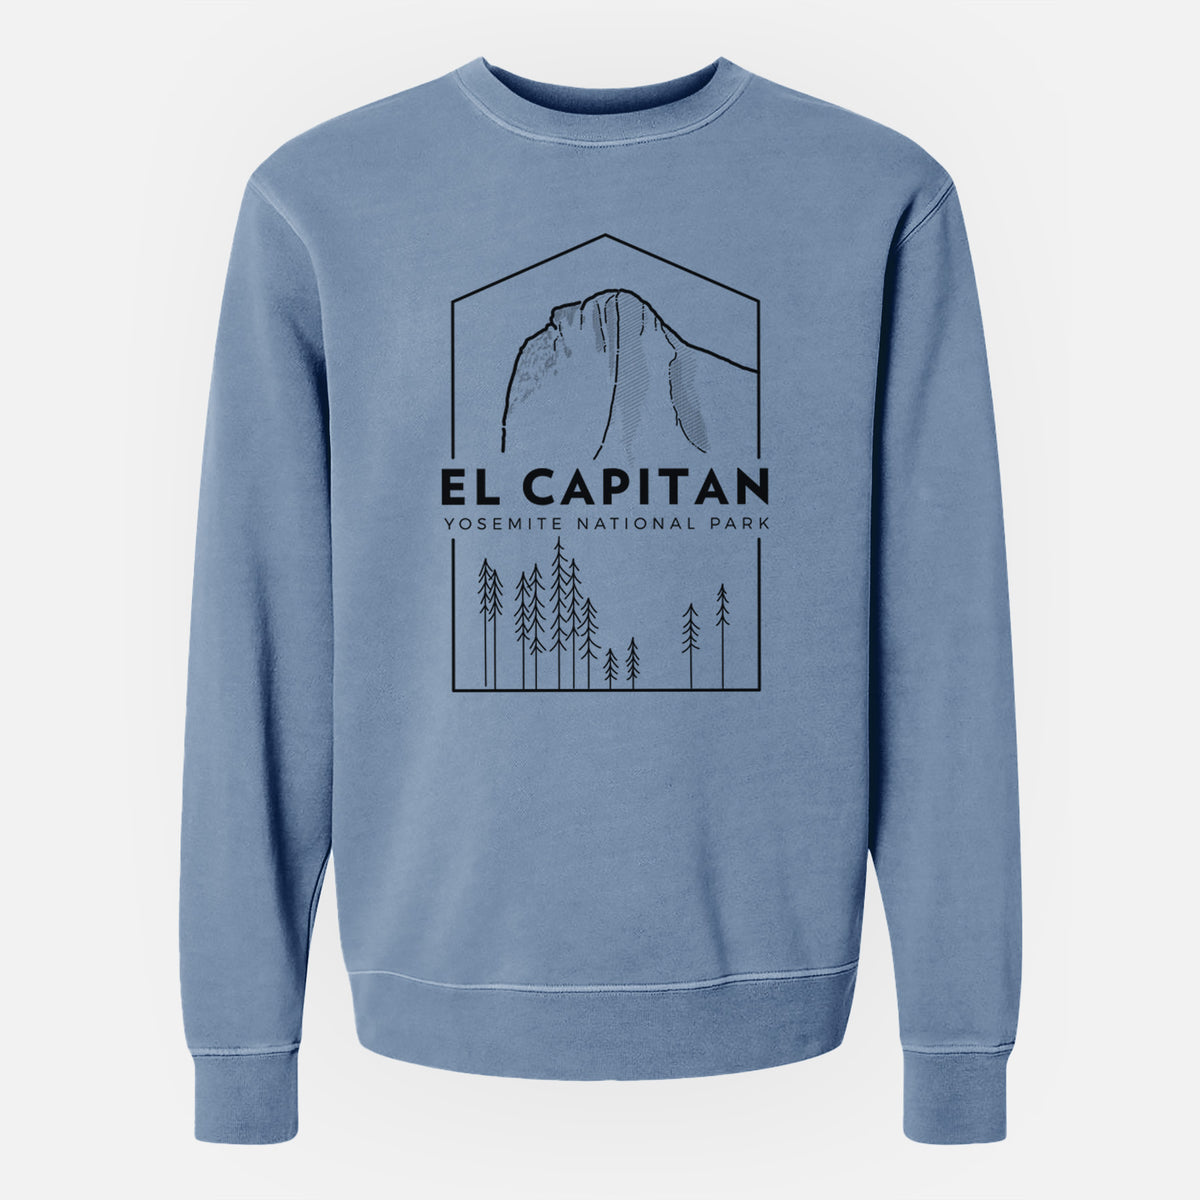 El Capitan - Yosemite National Park - Unisex Pigment Dyed Crew Sweatshirt